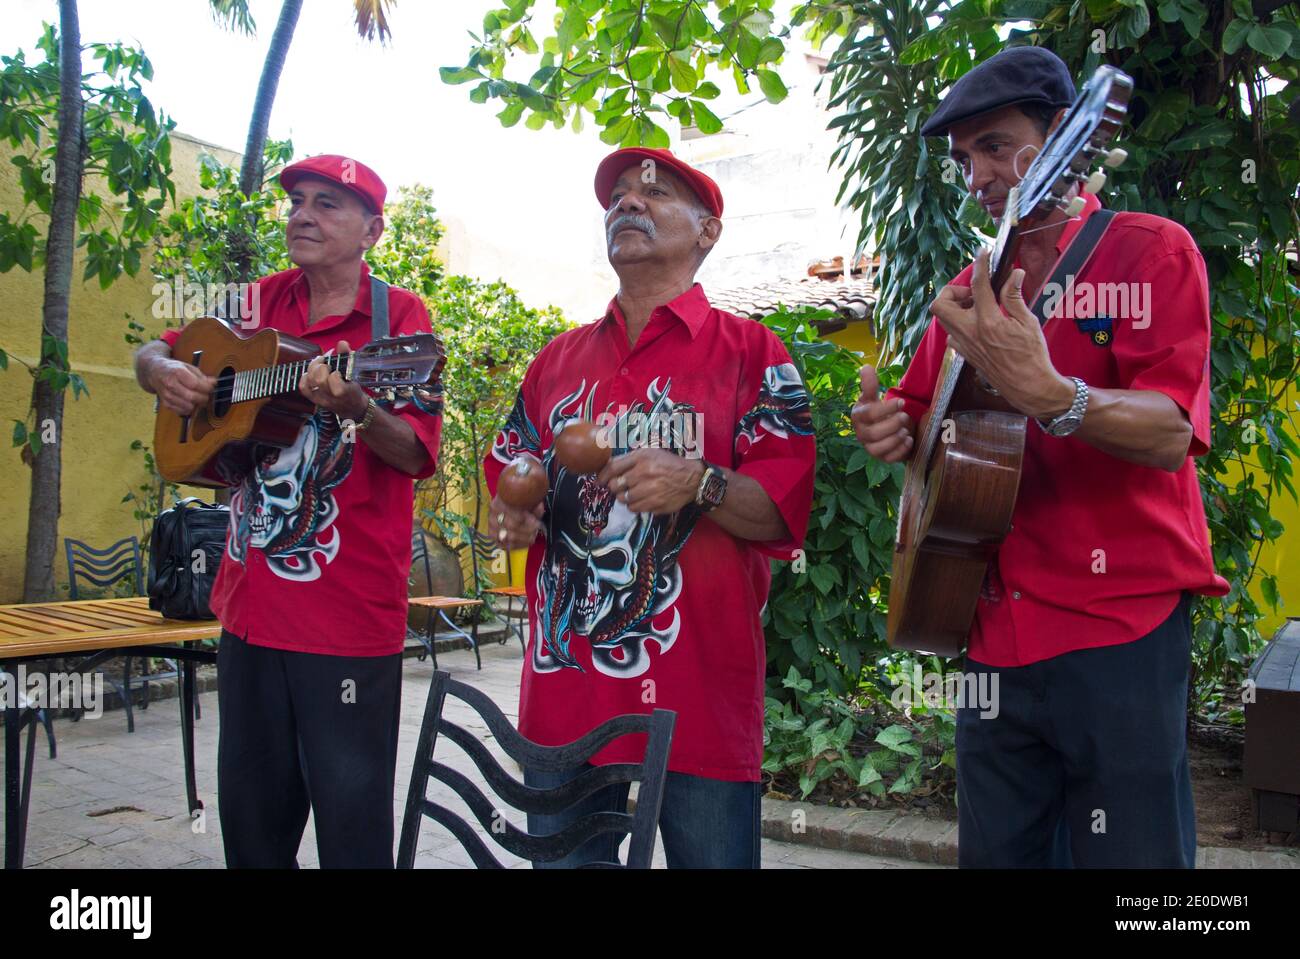 Musicians playing guitars, maracas and singing, Camaguey, Cuba Stock Photo